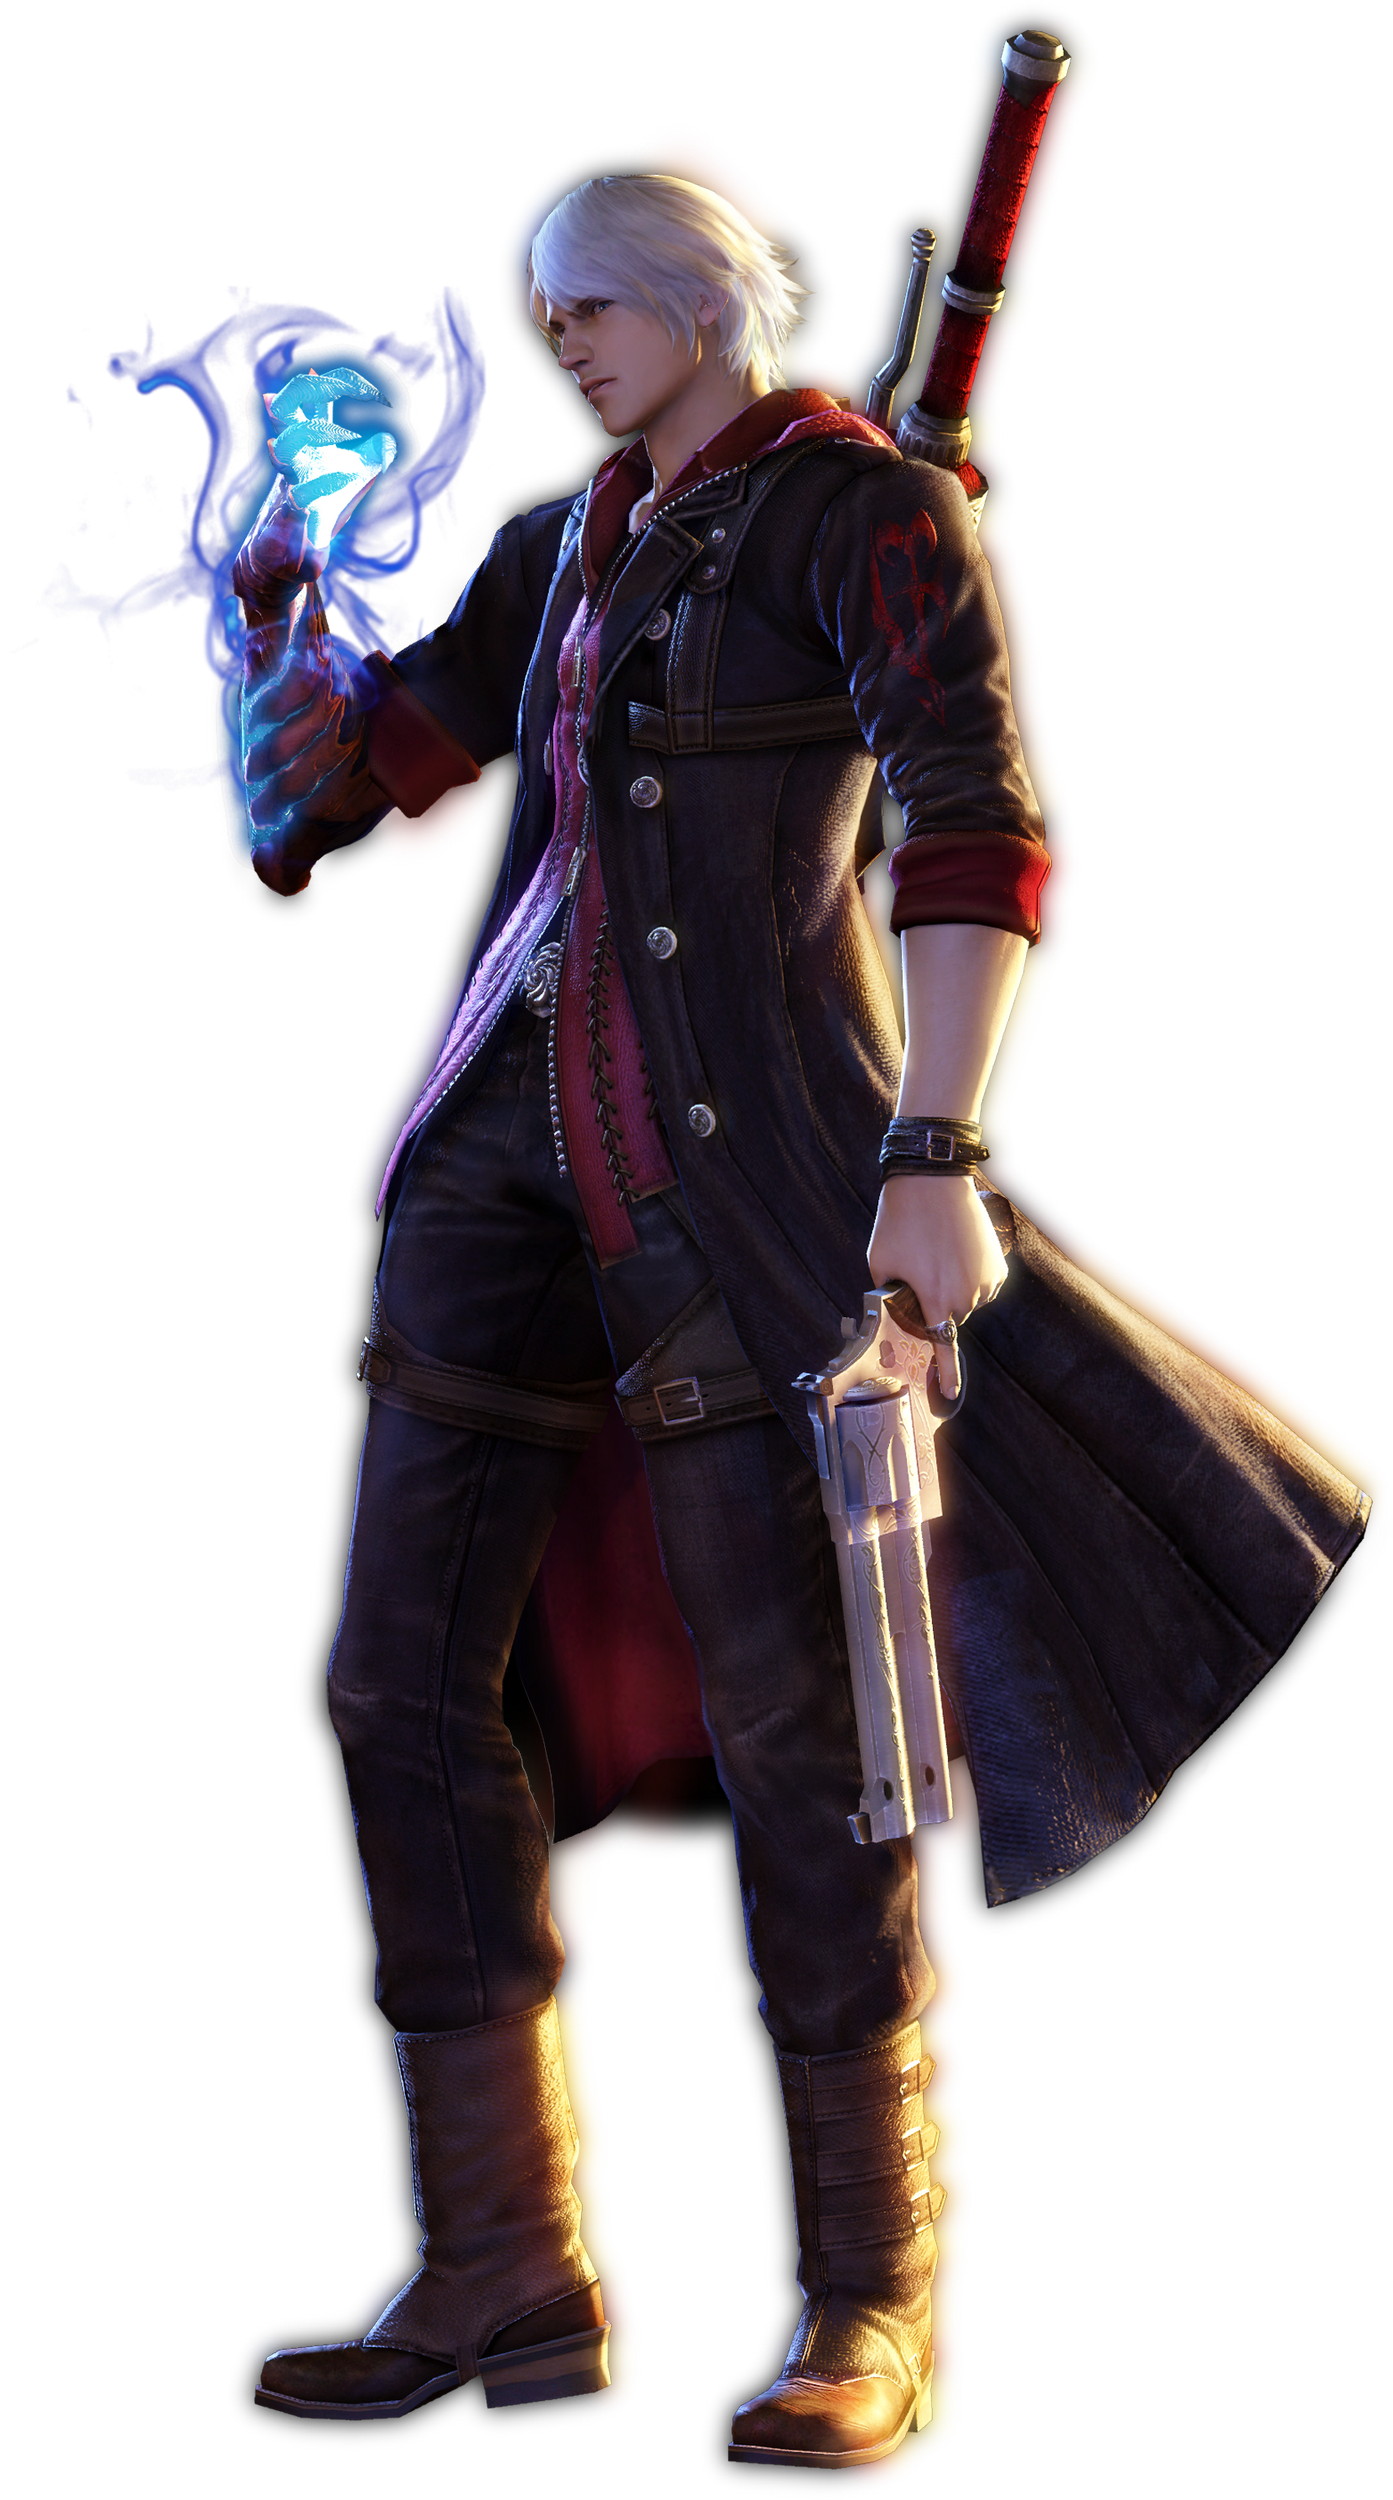 Download Devil May Cry Character Dante Fictional Mercenary Hq Png Image Freepngimg